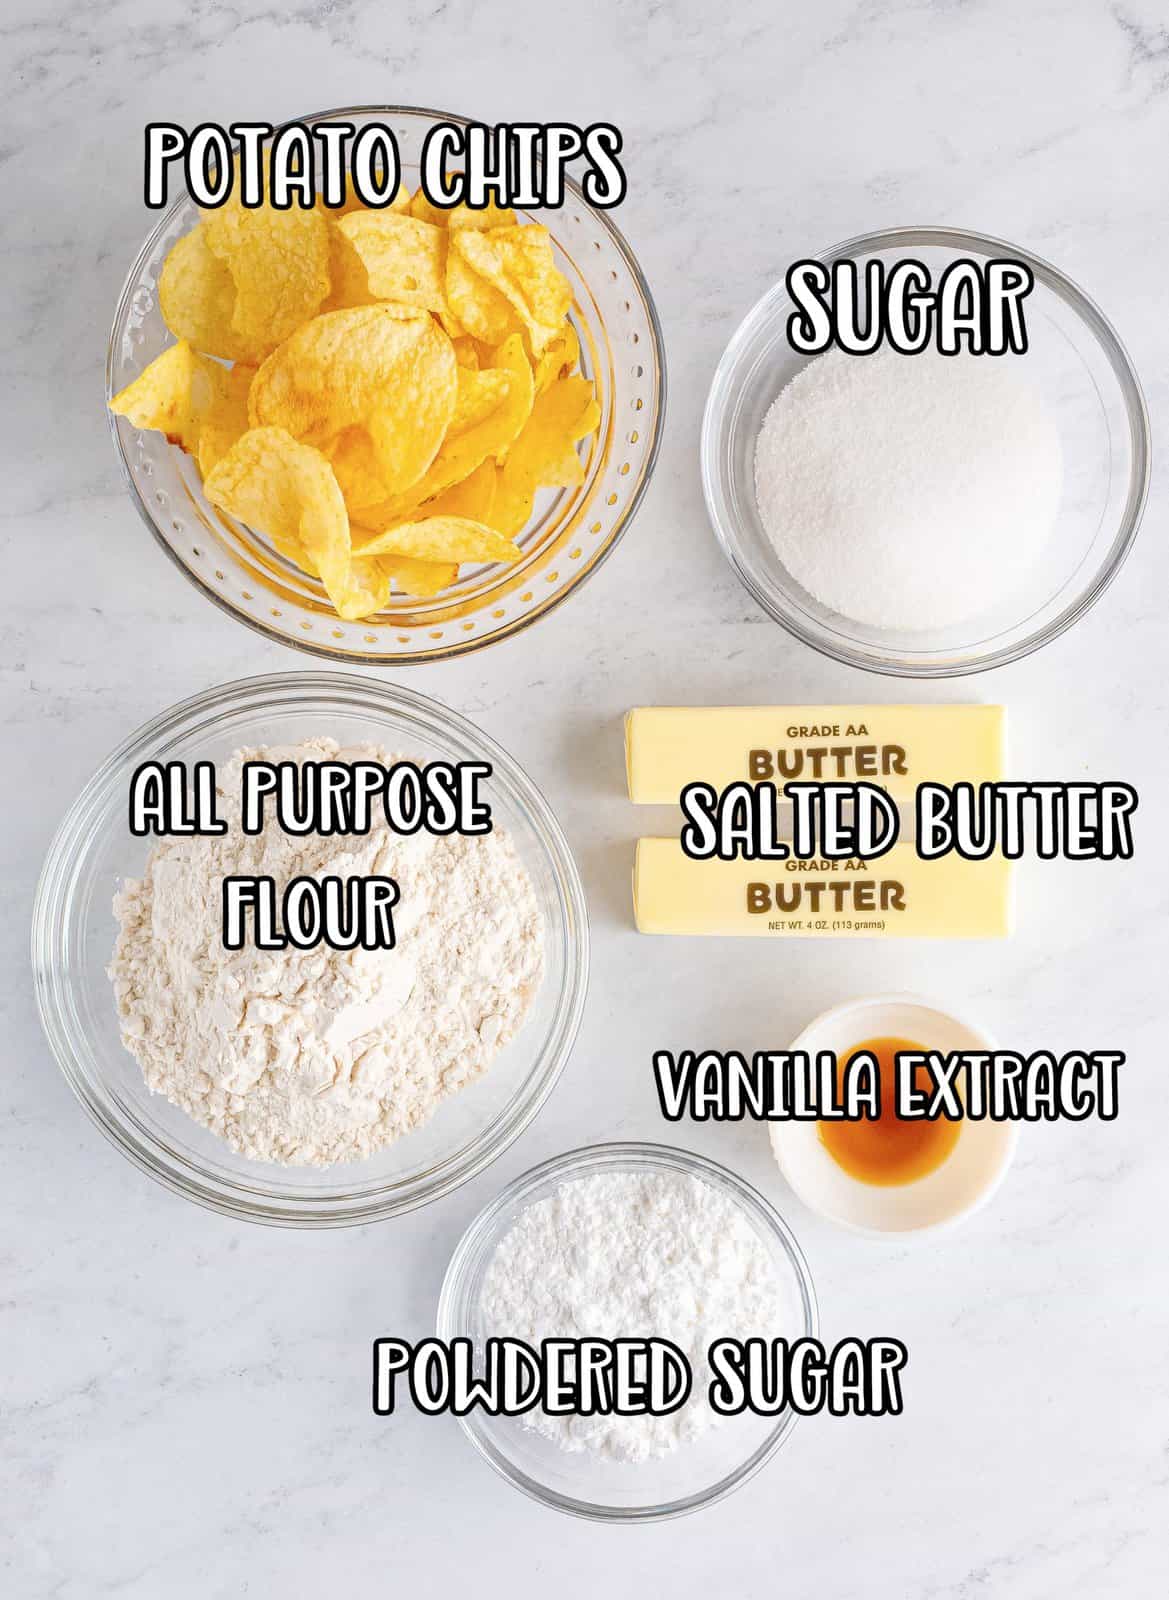 Butter, sugar, flour, potato chips, vanilla extract, and powdered sugar.